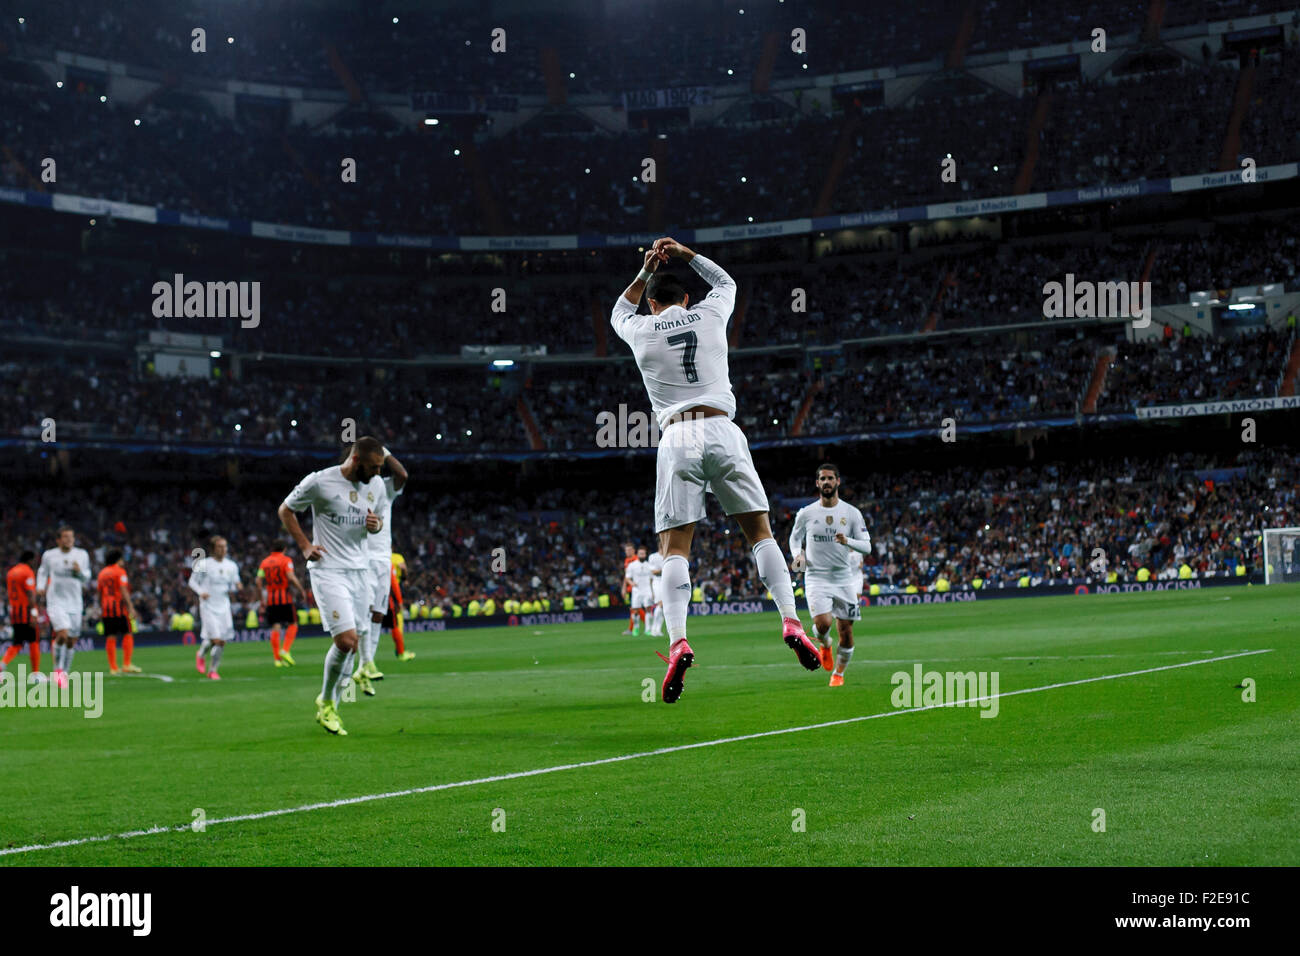 Cristiano Ronaldo Goal High Resolution Stock Photography and